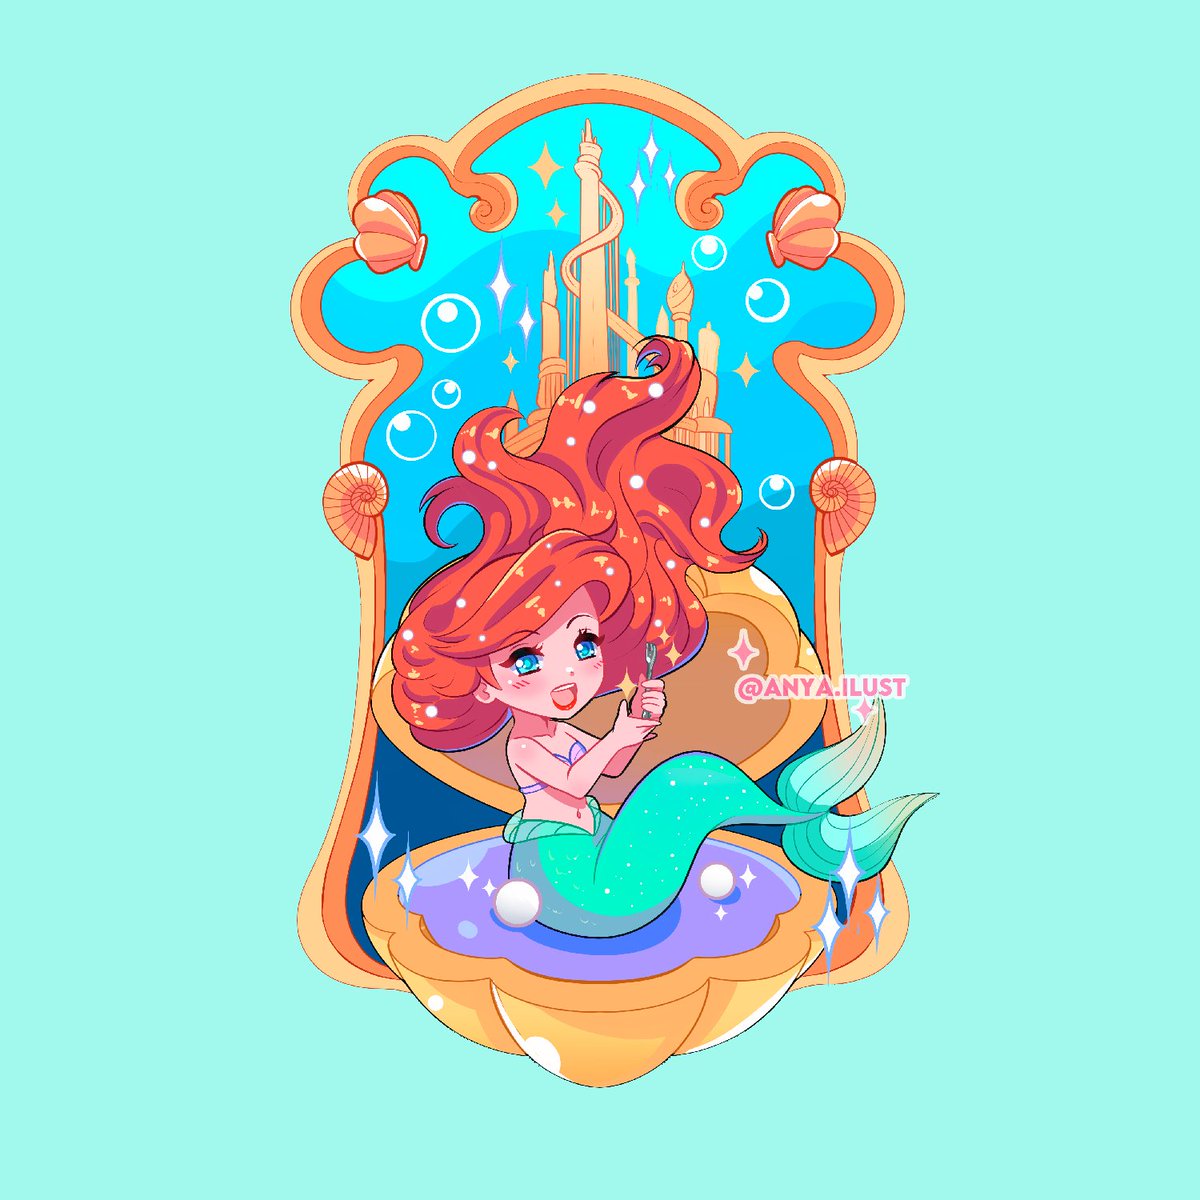 Ariel fan art! ✨🧜 #littlemermaid #Disney #chibiart #fairytalemagic #anime